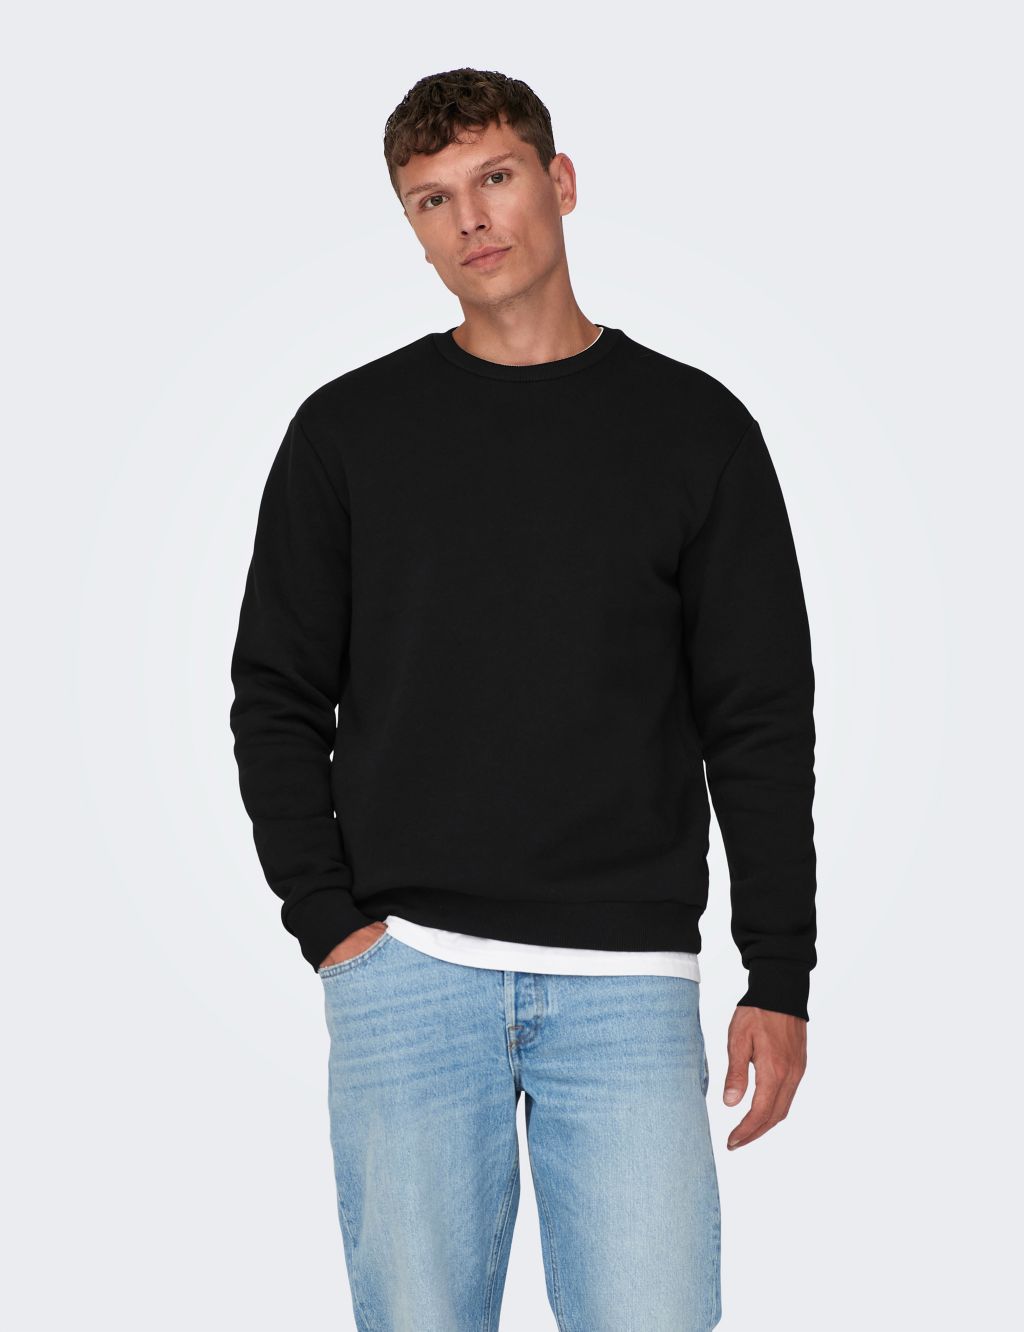 Men’s Black Hoodies & Sweatshirts | M&S